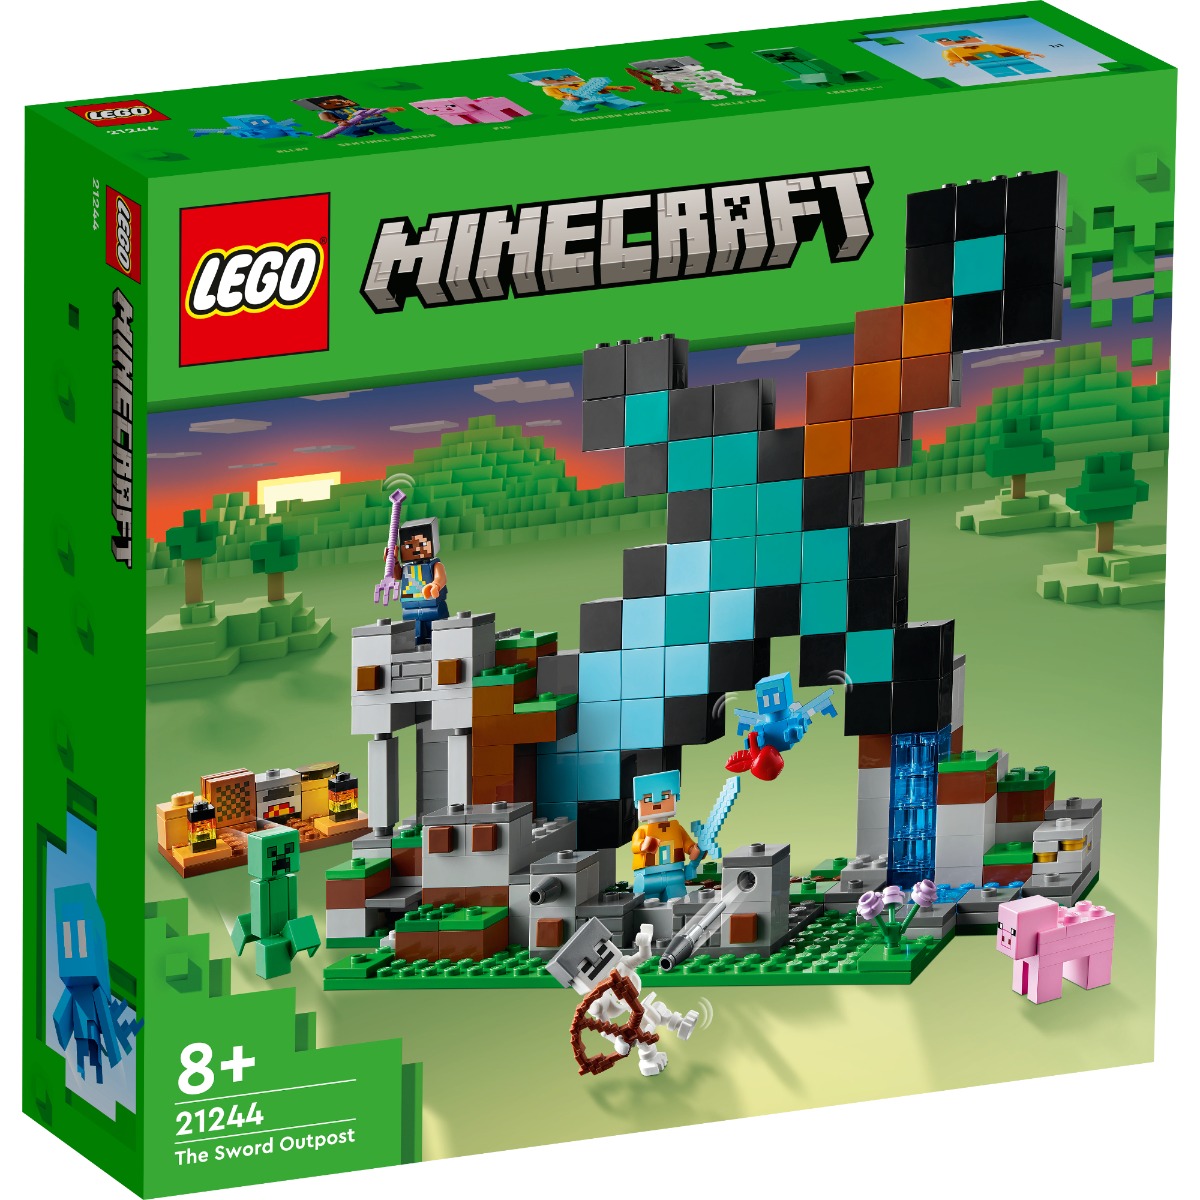 LEGO® Minecraft™ – Avanpostul sabiei (21244) (21244) imagine 2022 protejamcopilaria.ro